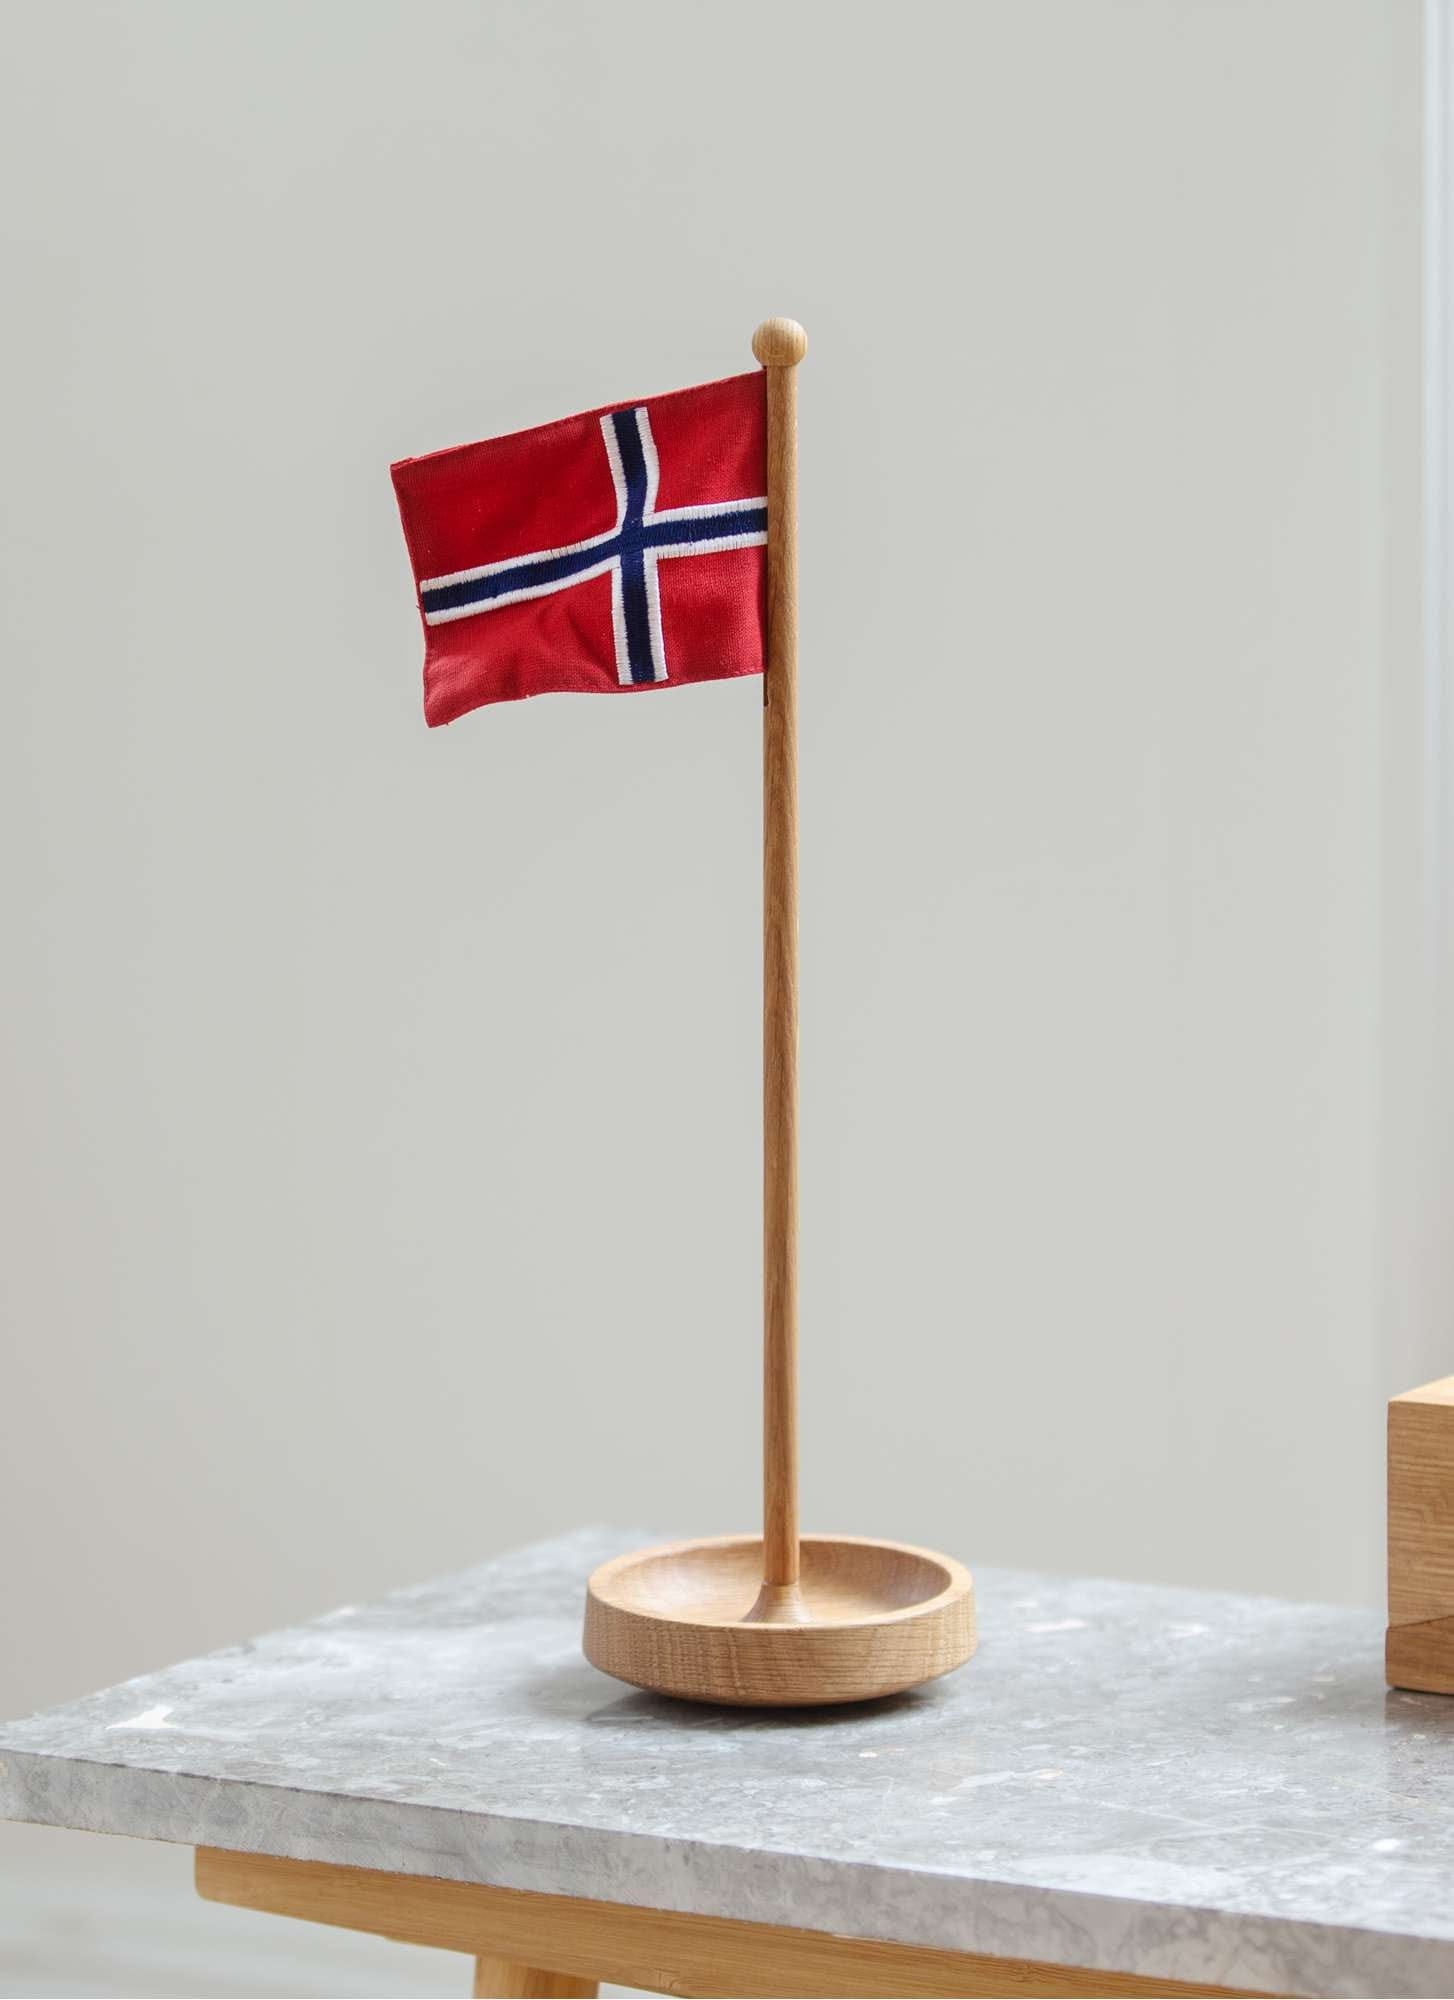 Spring Copenhagen Bordsflaggan, norsk flagga